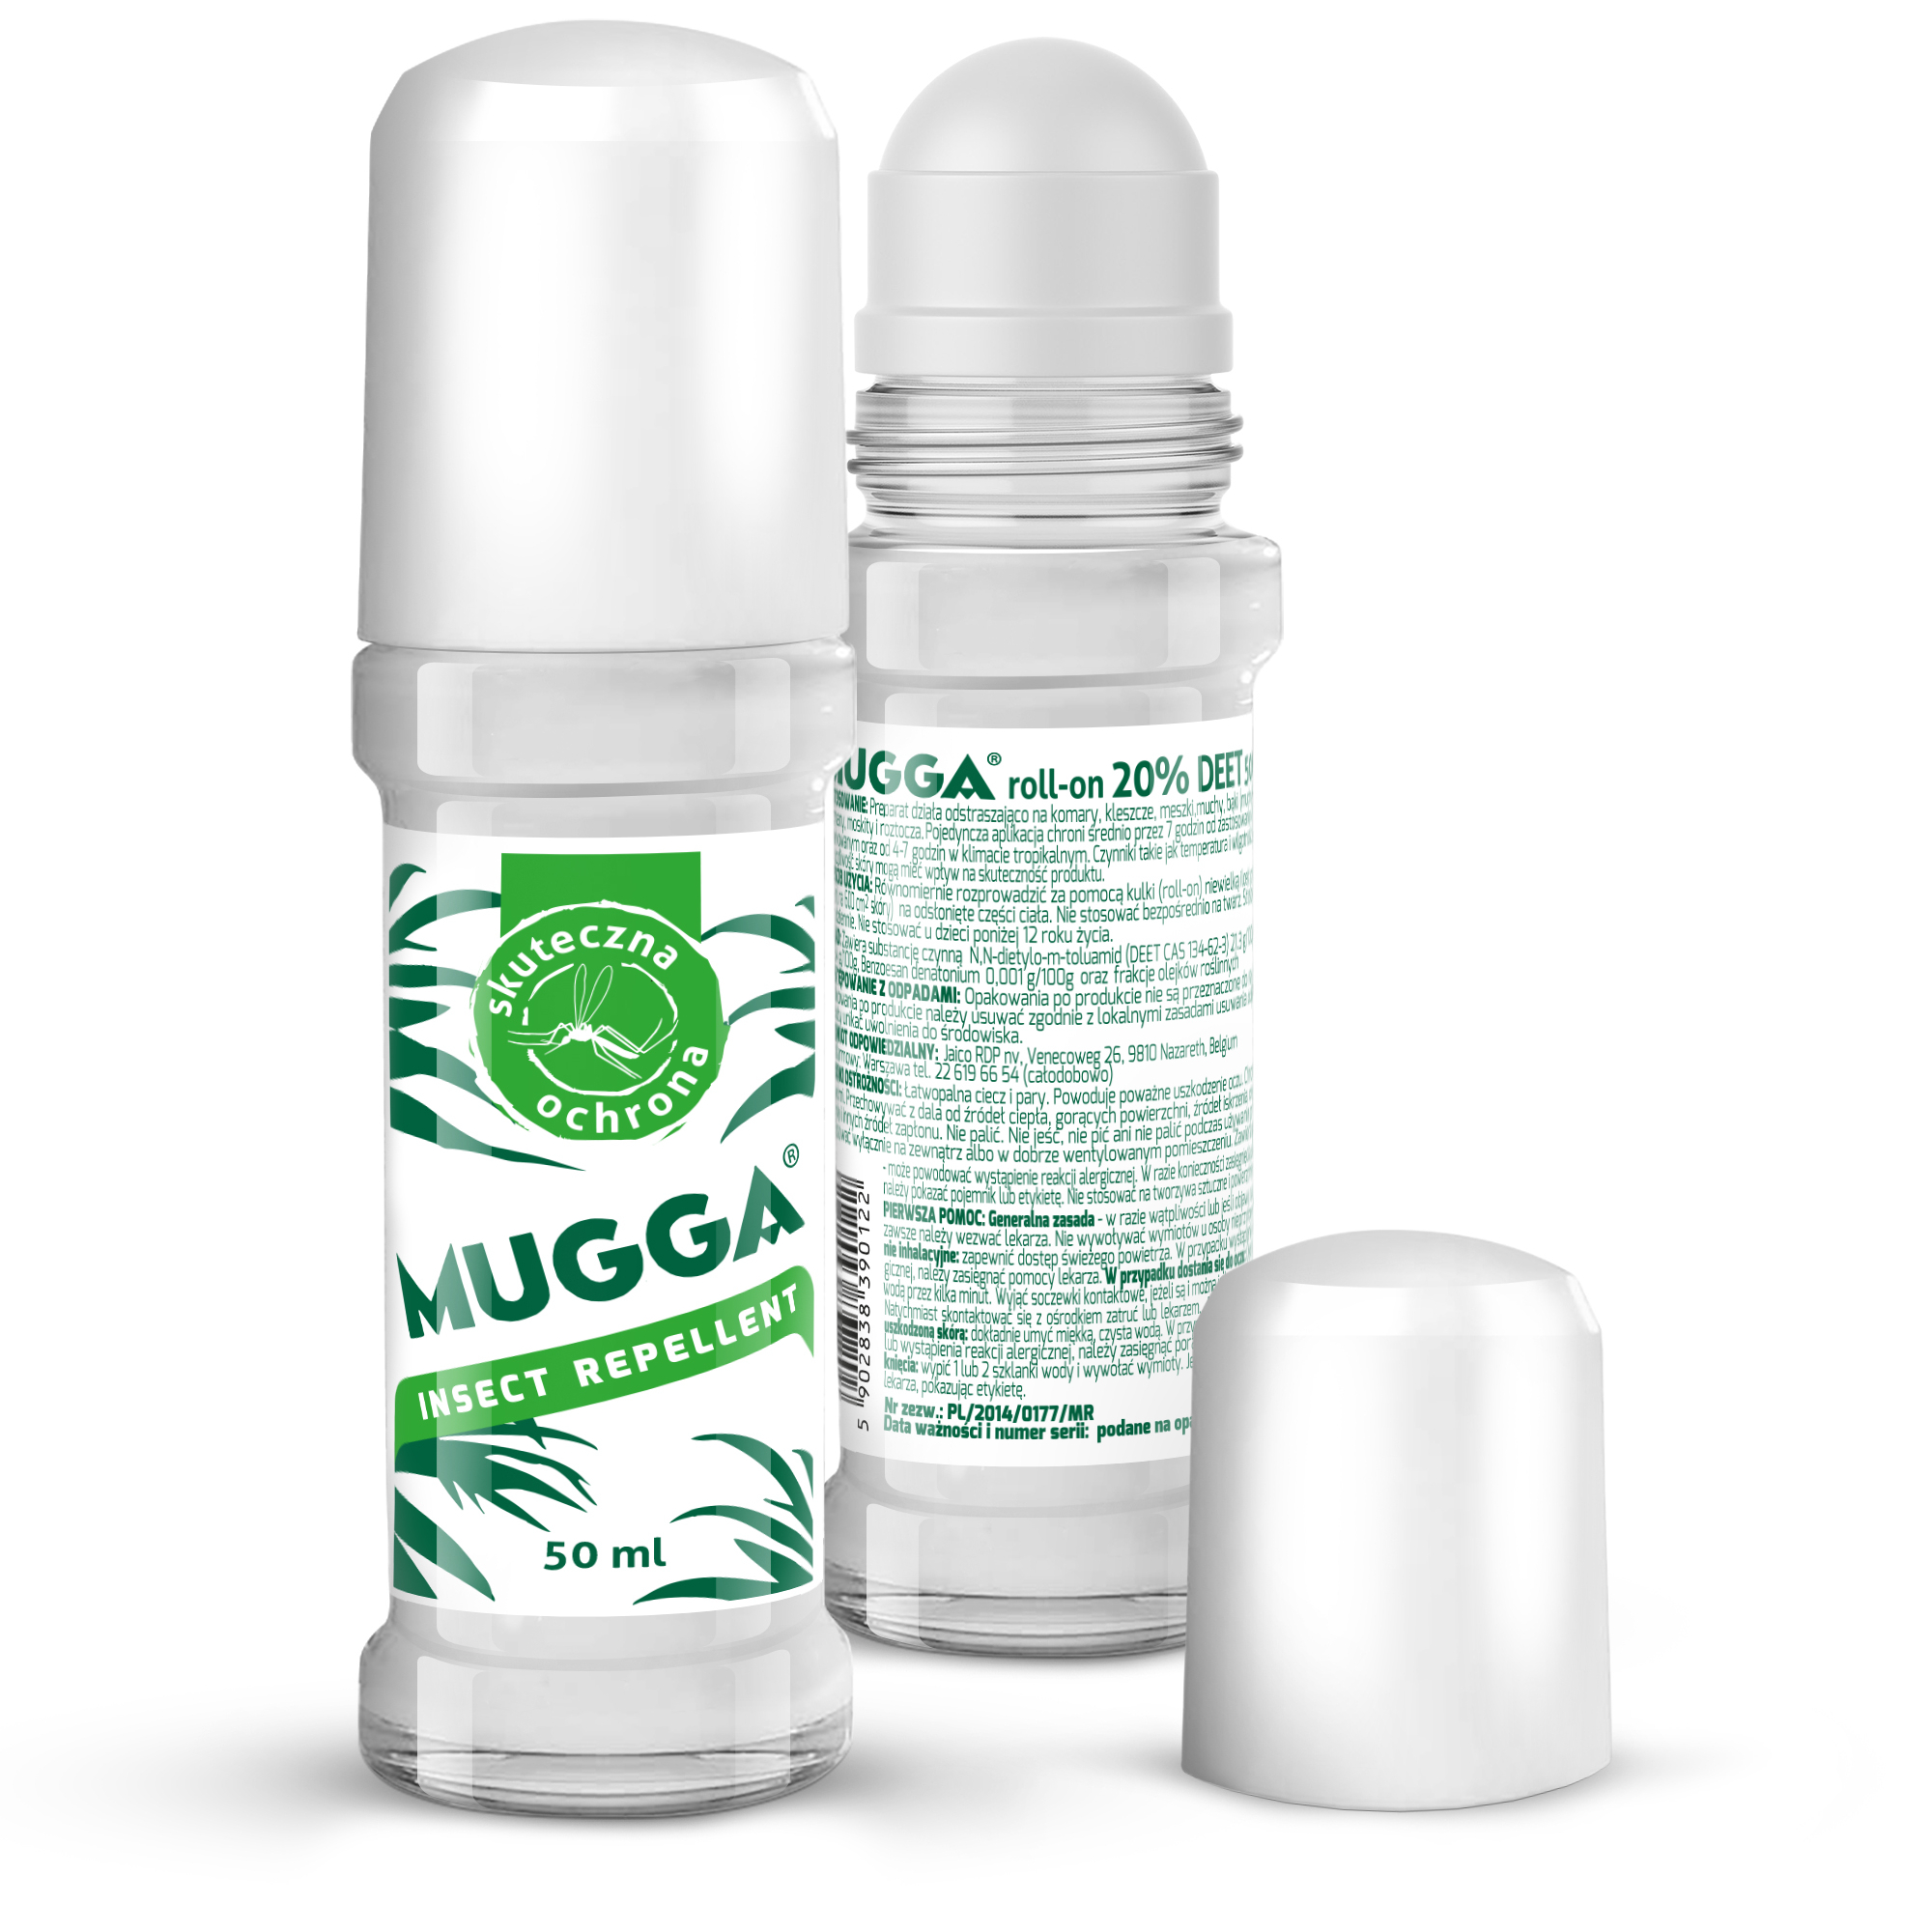 Mugga Roll-on DEET 20% - środek przeciw kleszczom w kulce 50ml.